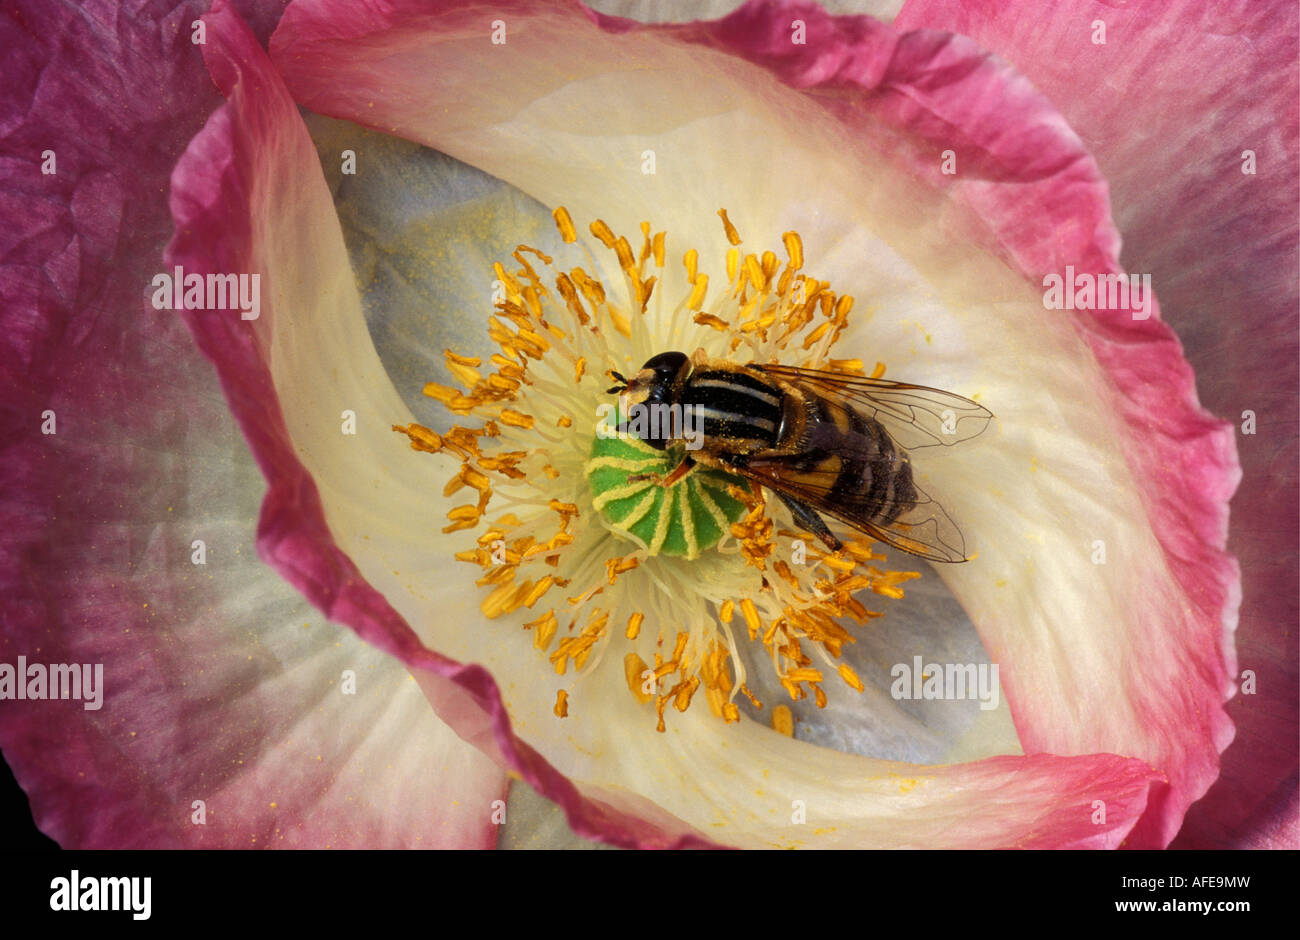 Netherlands Graveland Wasp on poppy flower Stock Photo